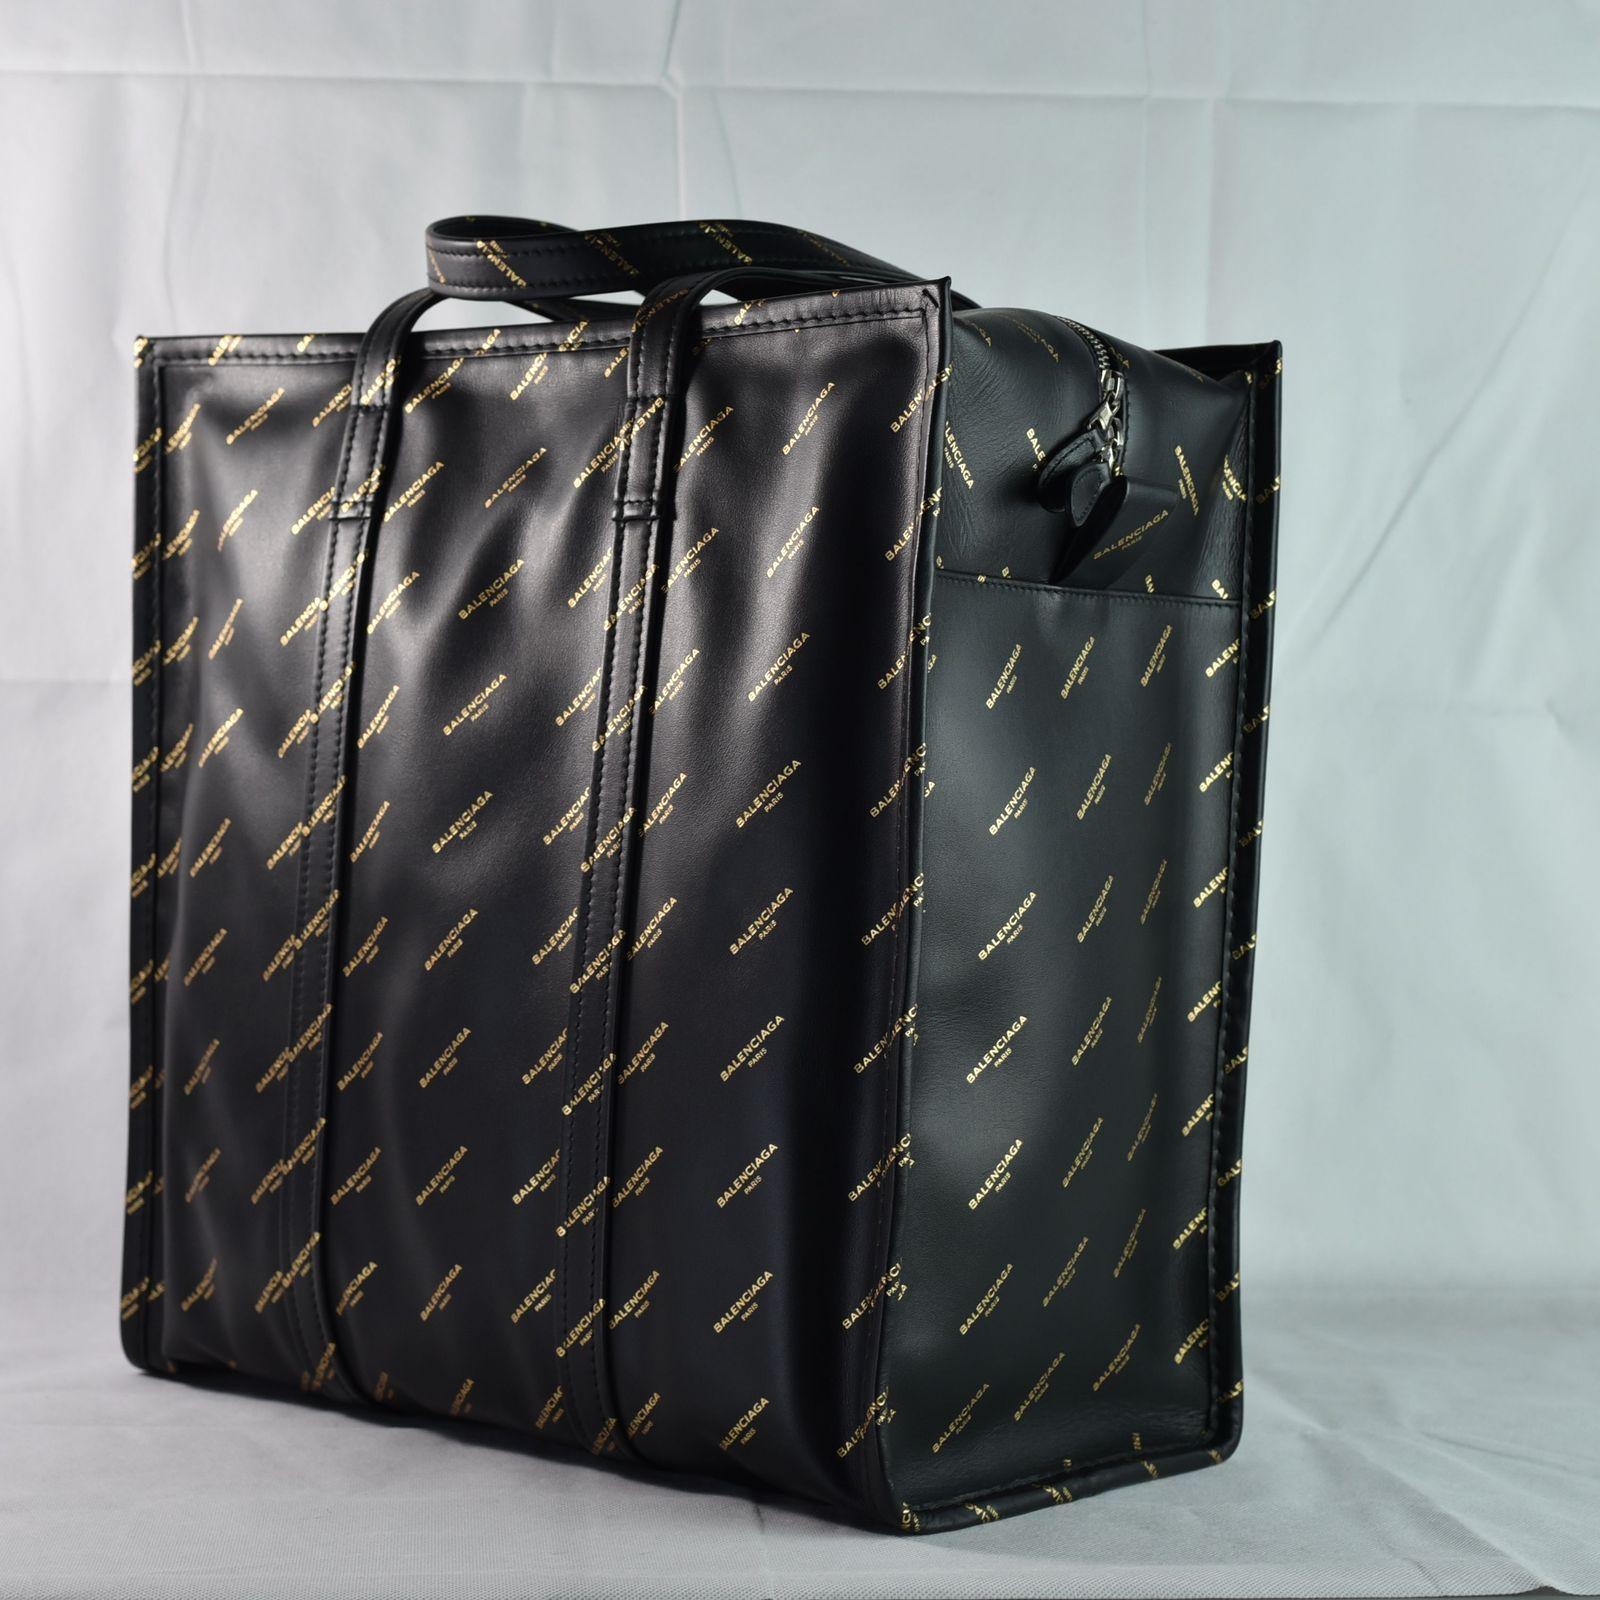 Balenciaga NEW Bazar Shopper M Black Leather Tote Bag Handbag 8